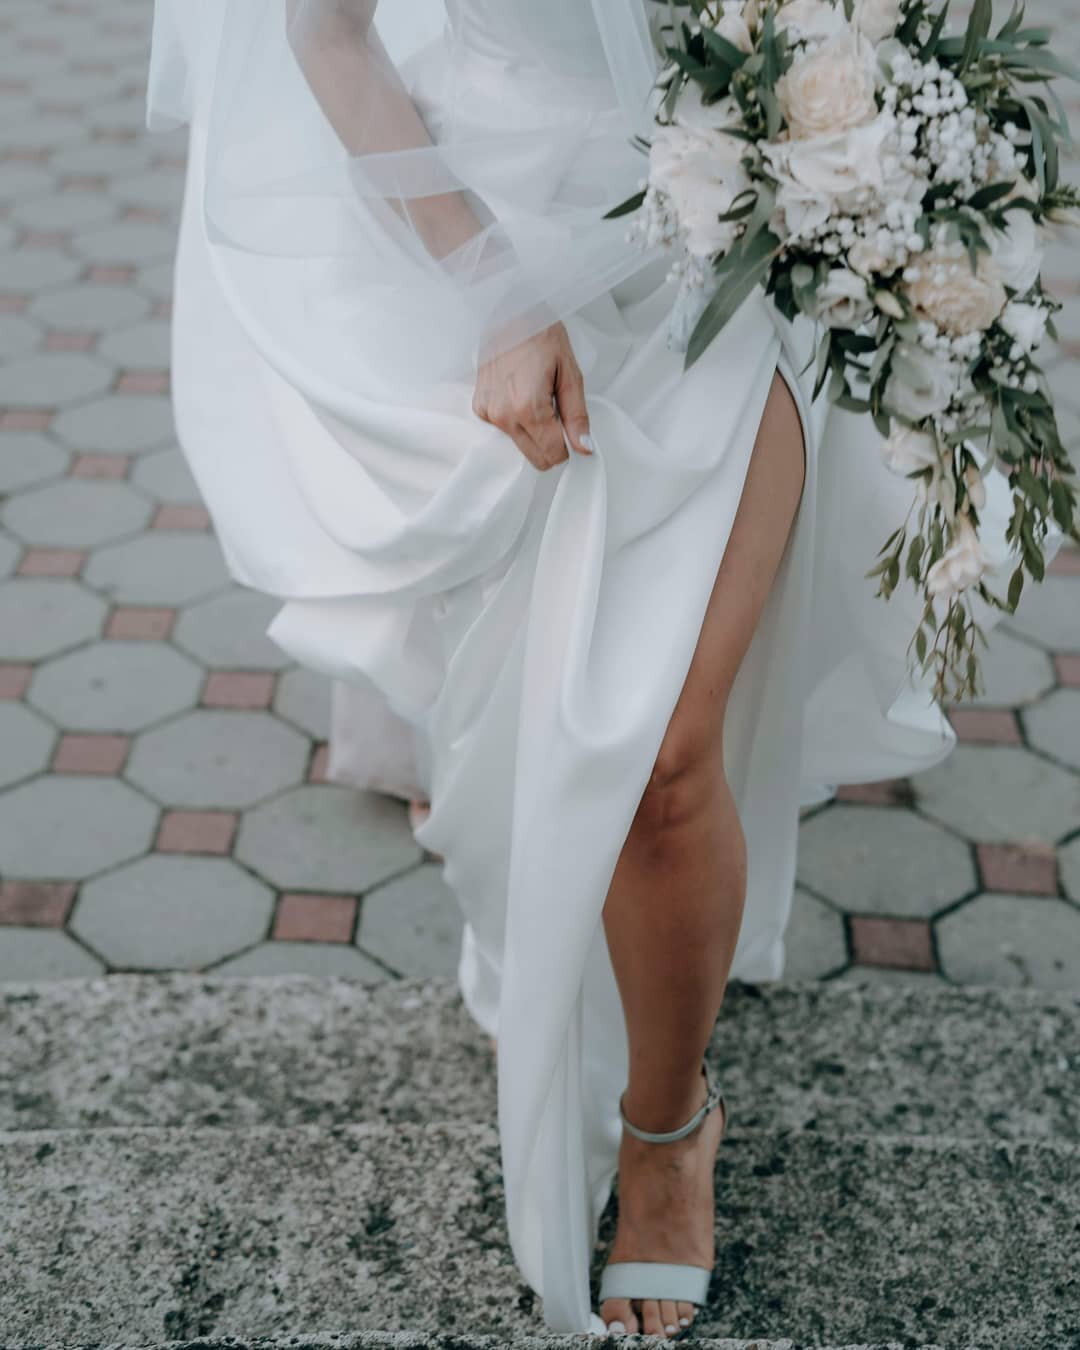 | M. 

#weddingphotography 
#inspiration #weddingdress #bride #bridestory #bridetobe #details #flowerbouquet #flowerpower #photography  #lookslikefilm #art #joyride #joy #lovely #white #natureart #naturephoto #nature #art #sonya7 #instadaily #vsco #v